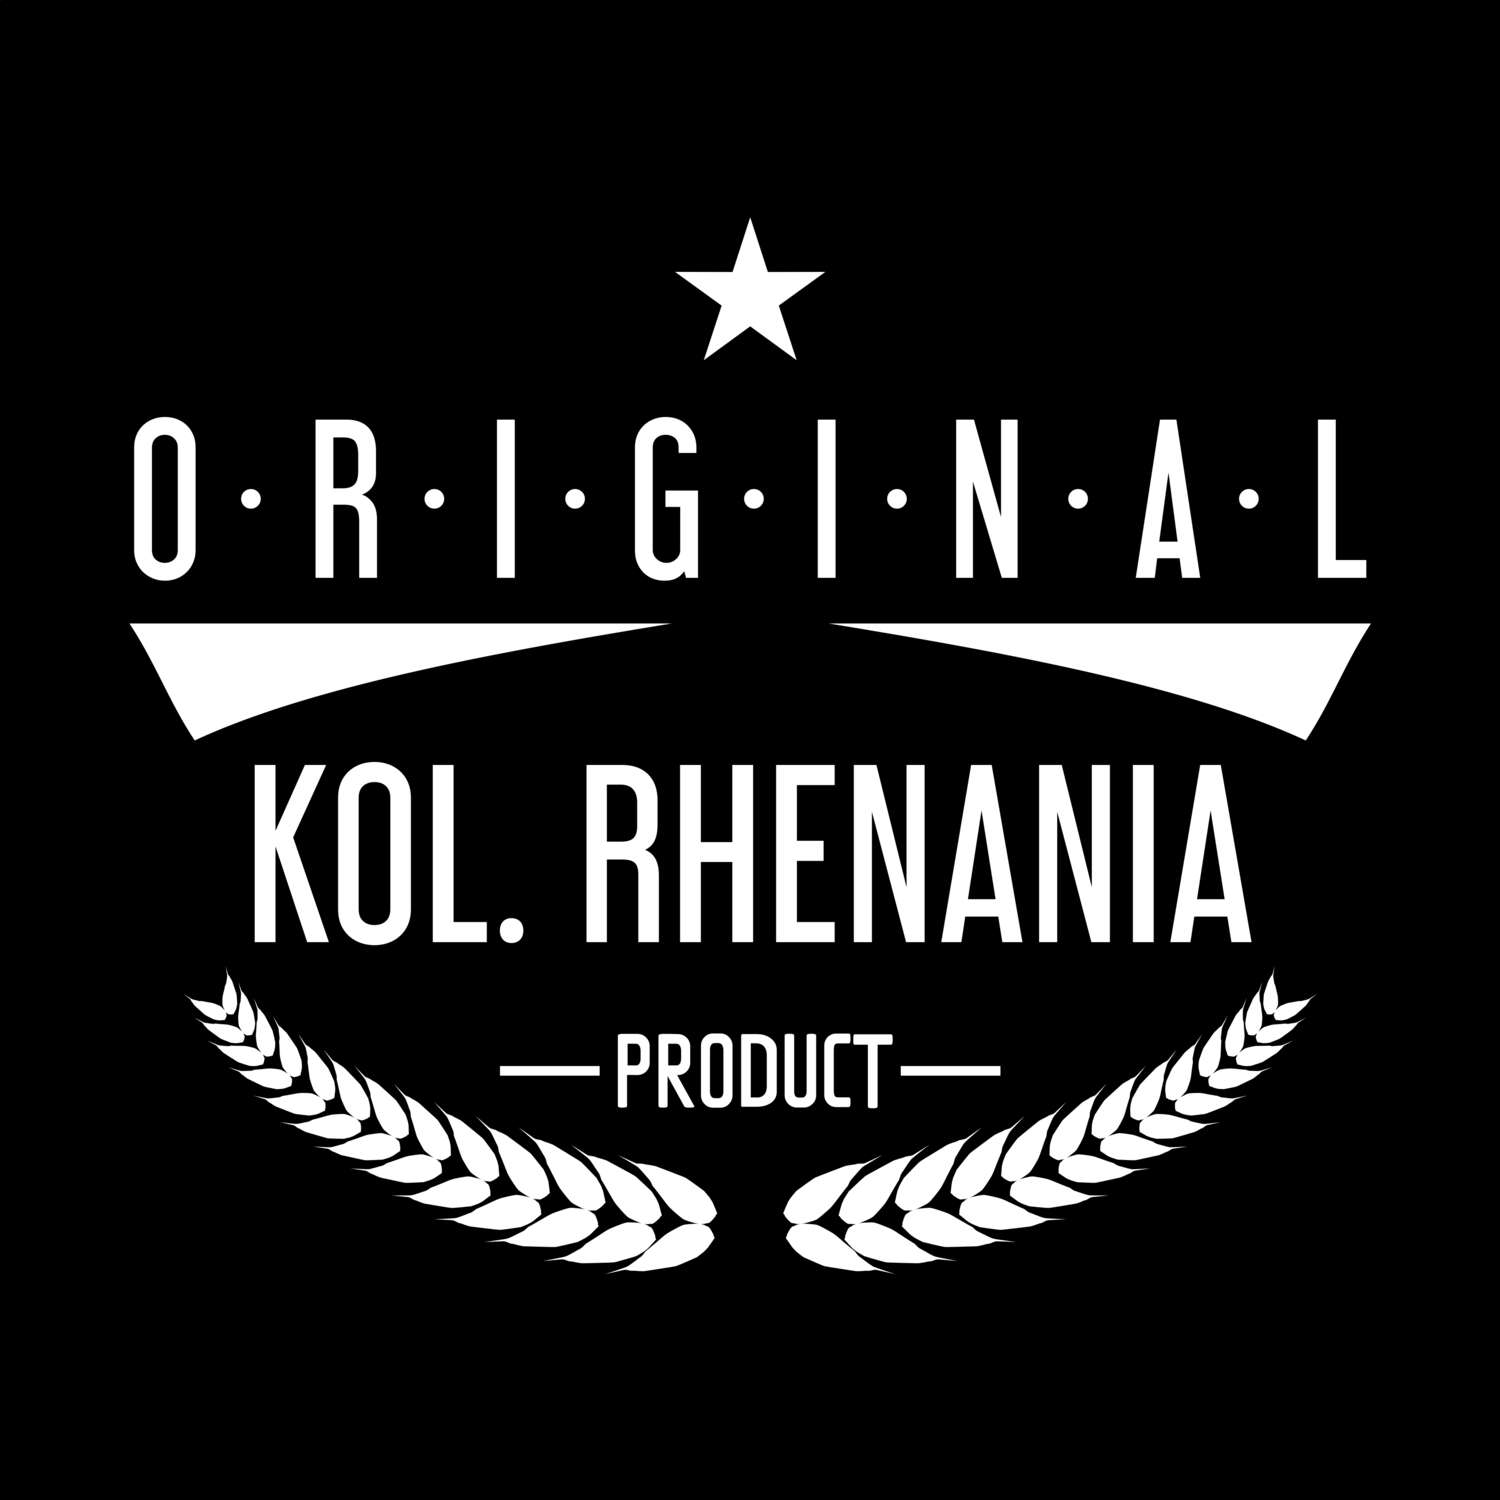 Kol. Rhenania T-Shirt »Original Product«